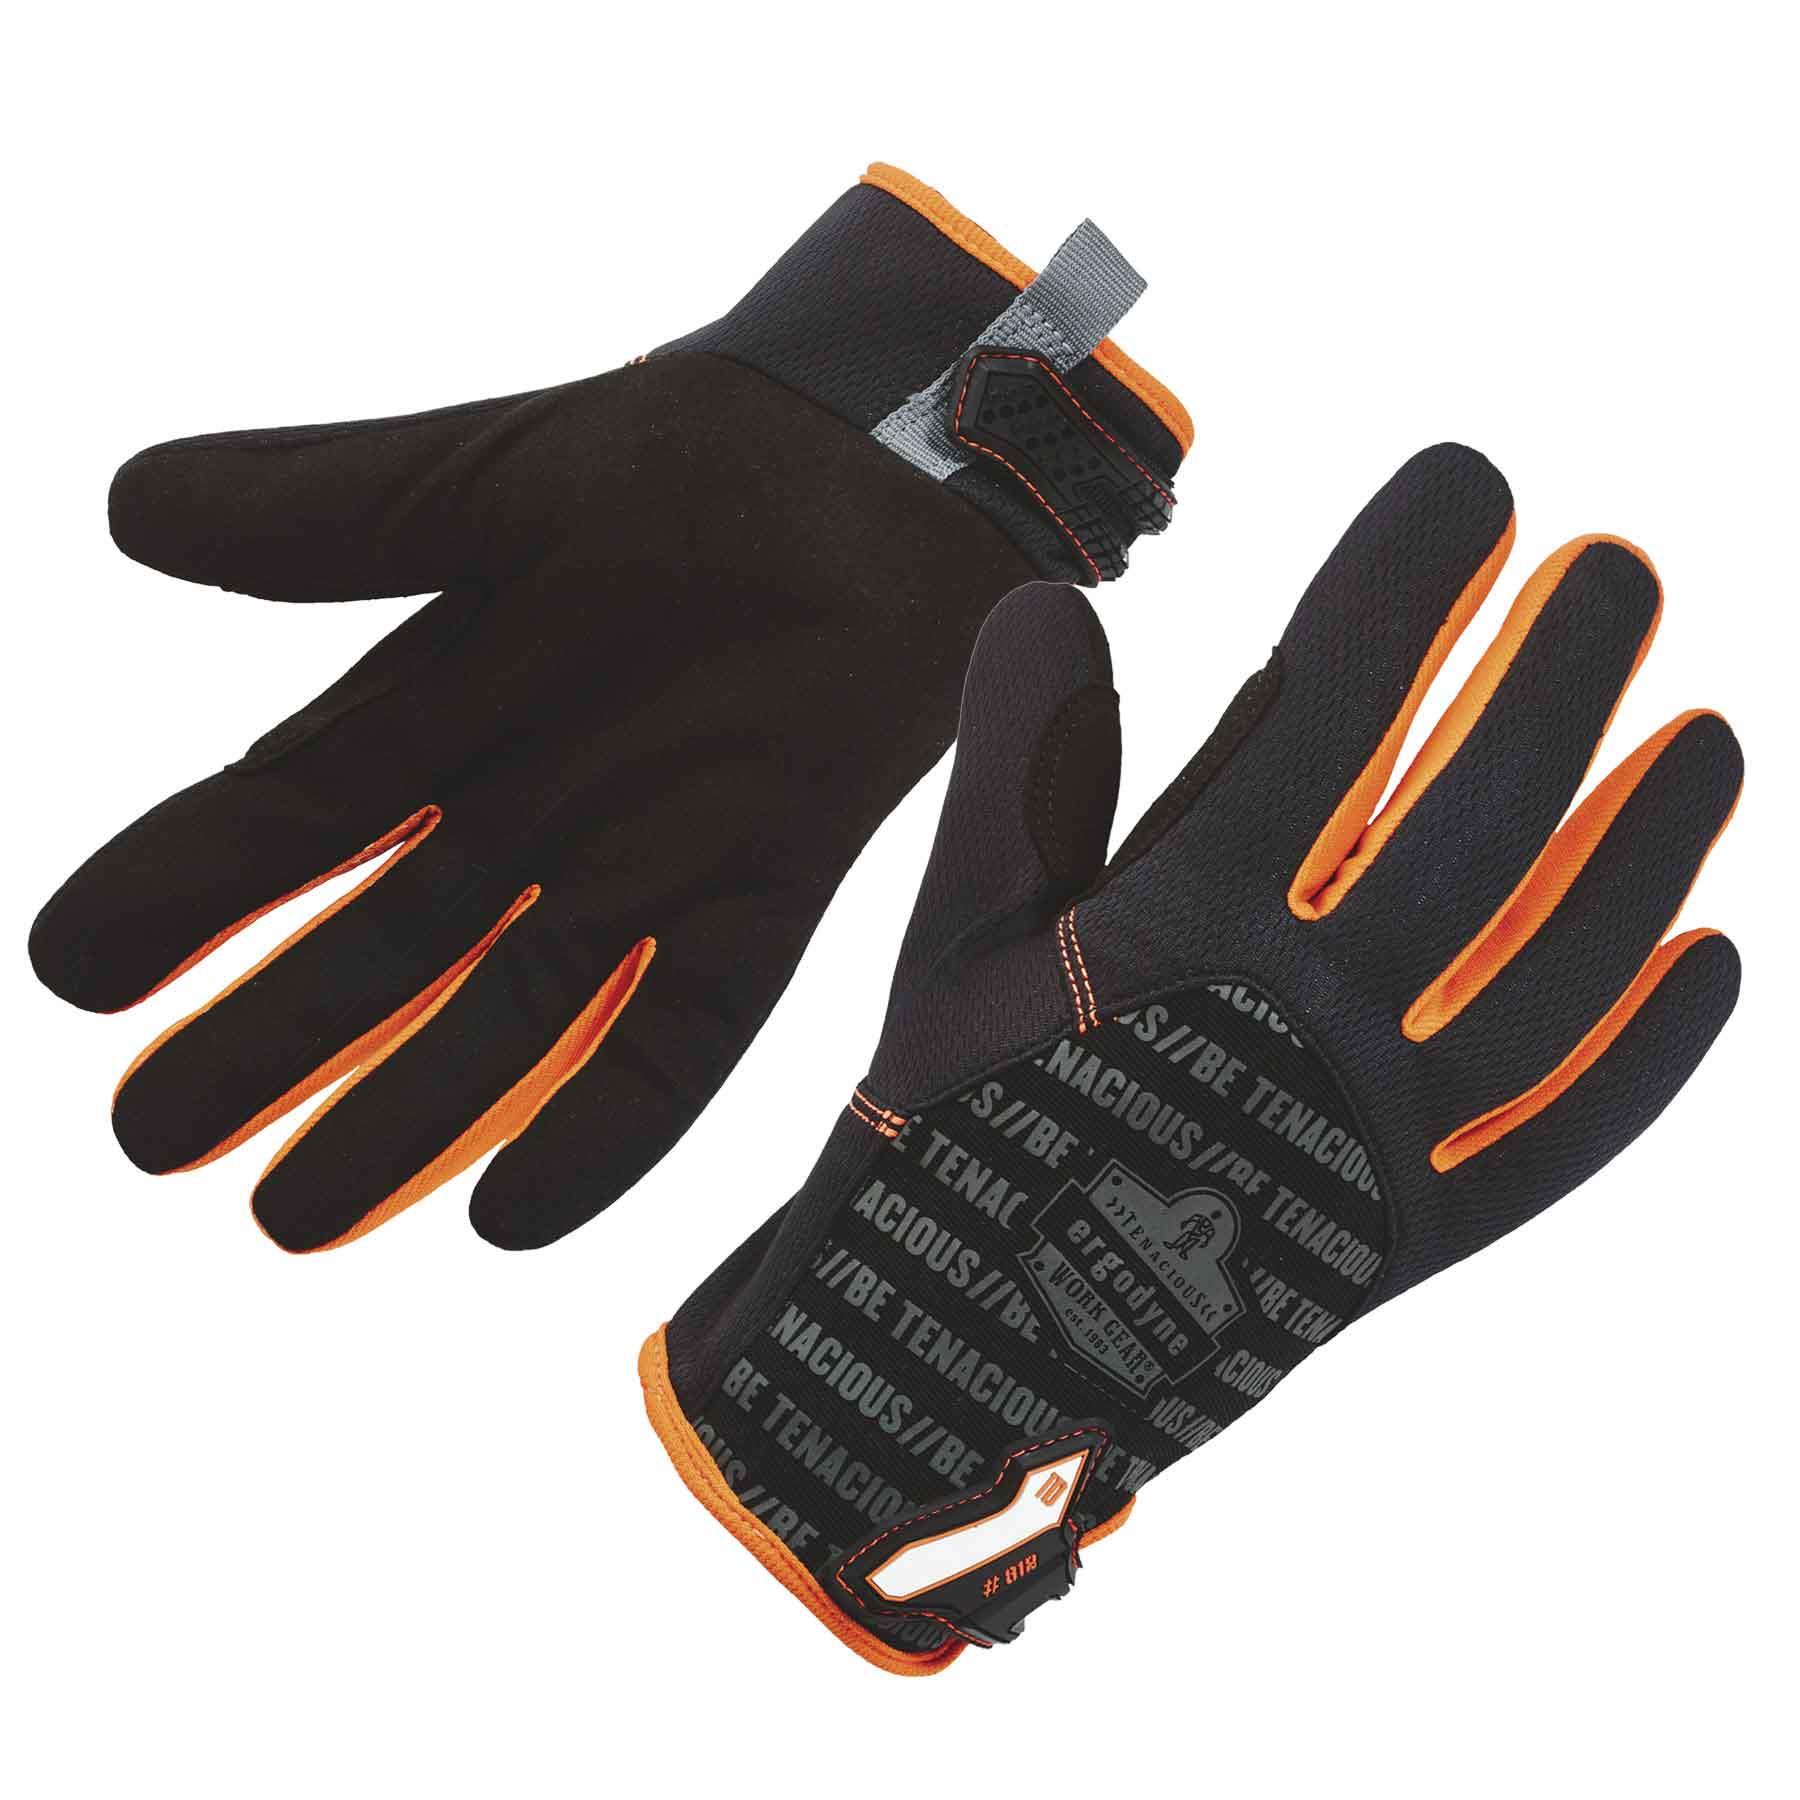 PROFLEX 812 STANDARD UTILITY GLOVES - Mechanics Gloves